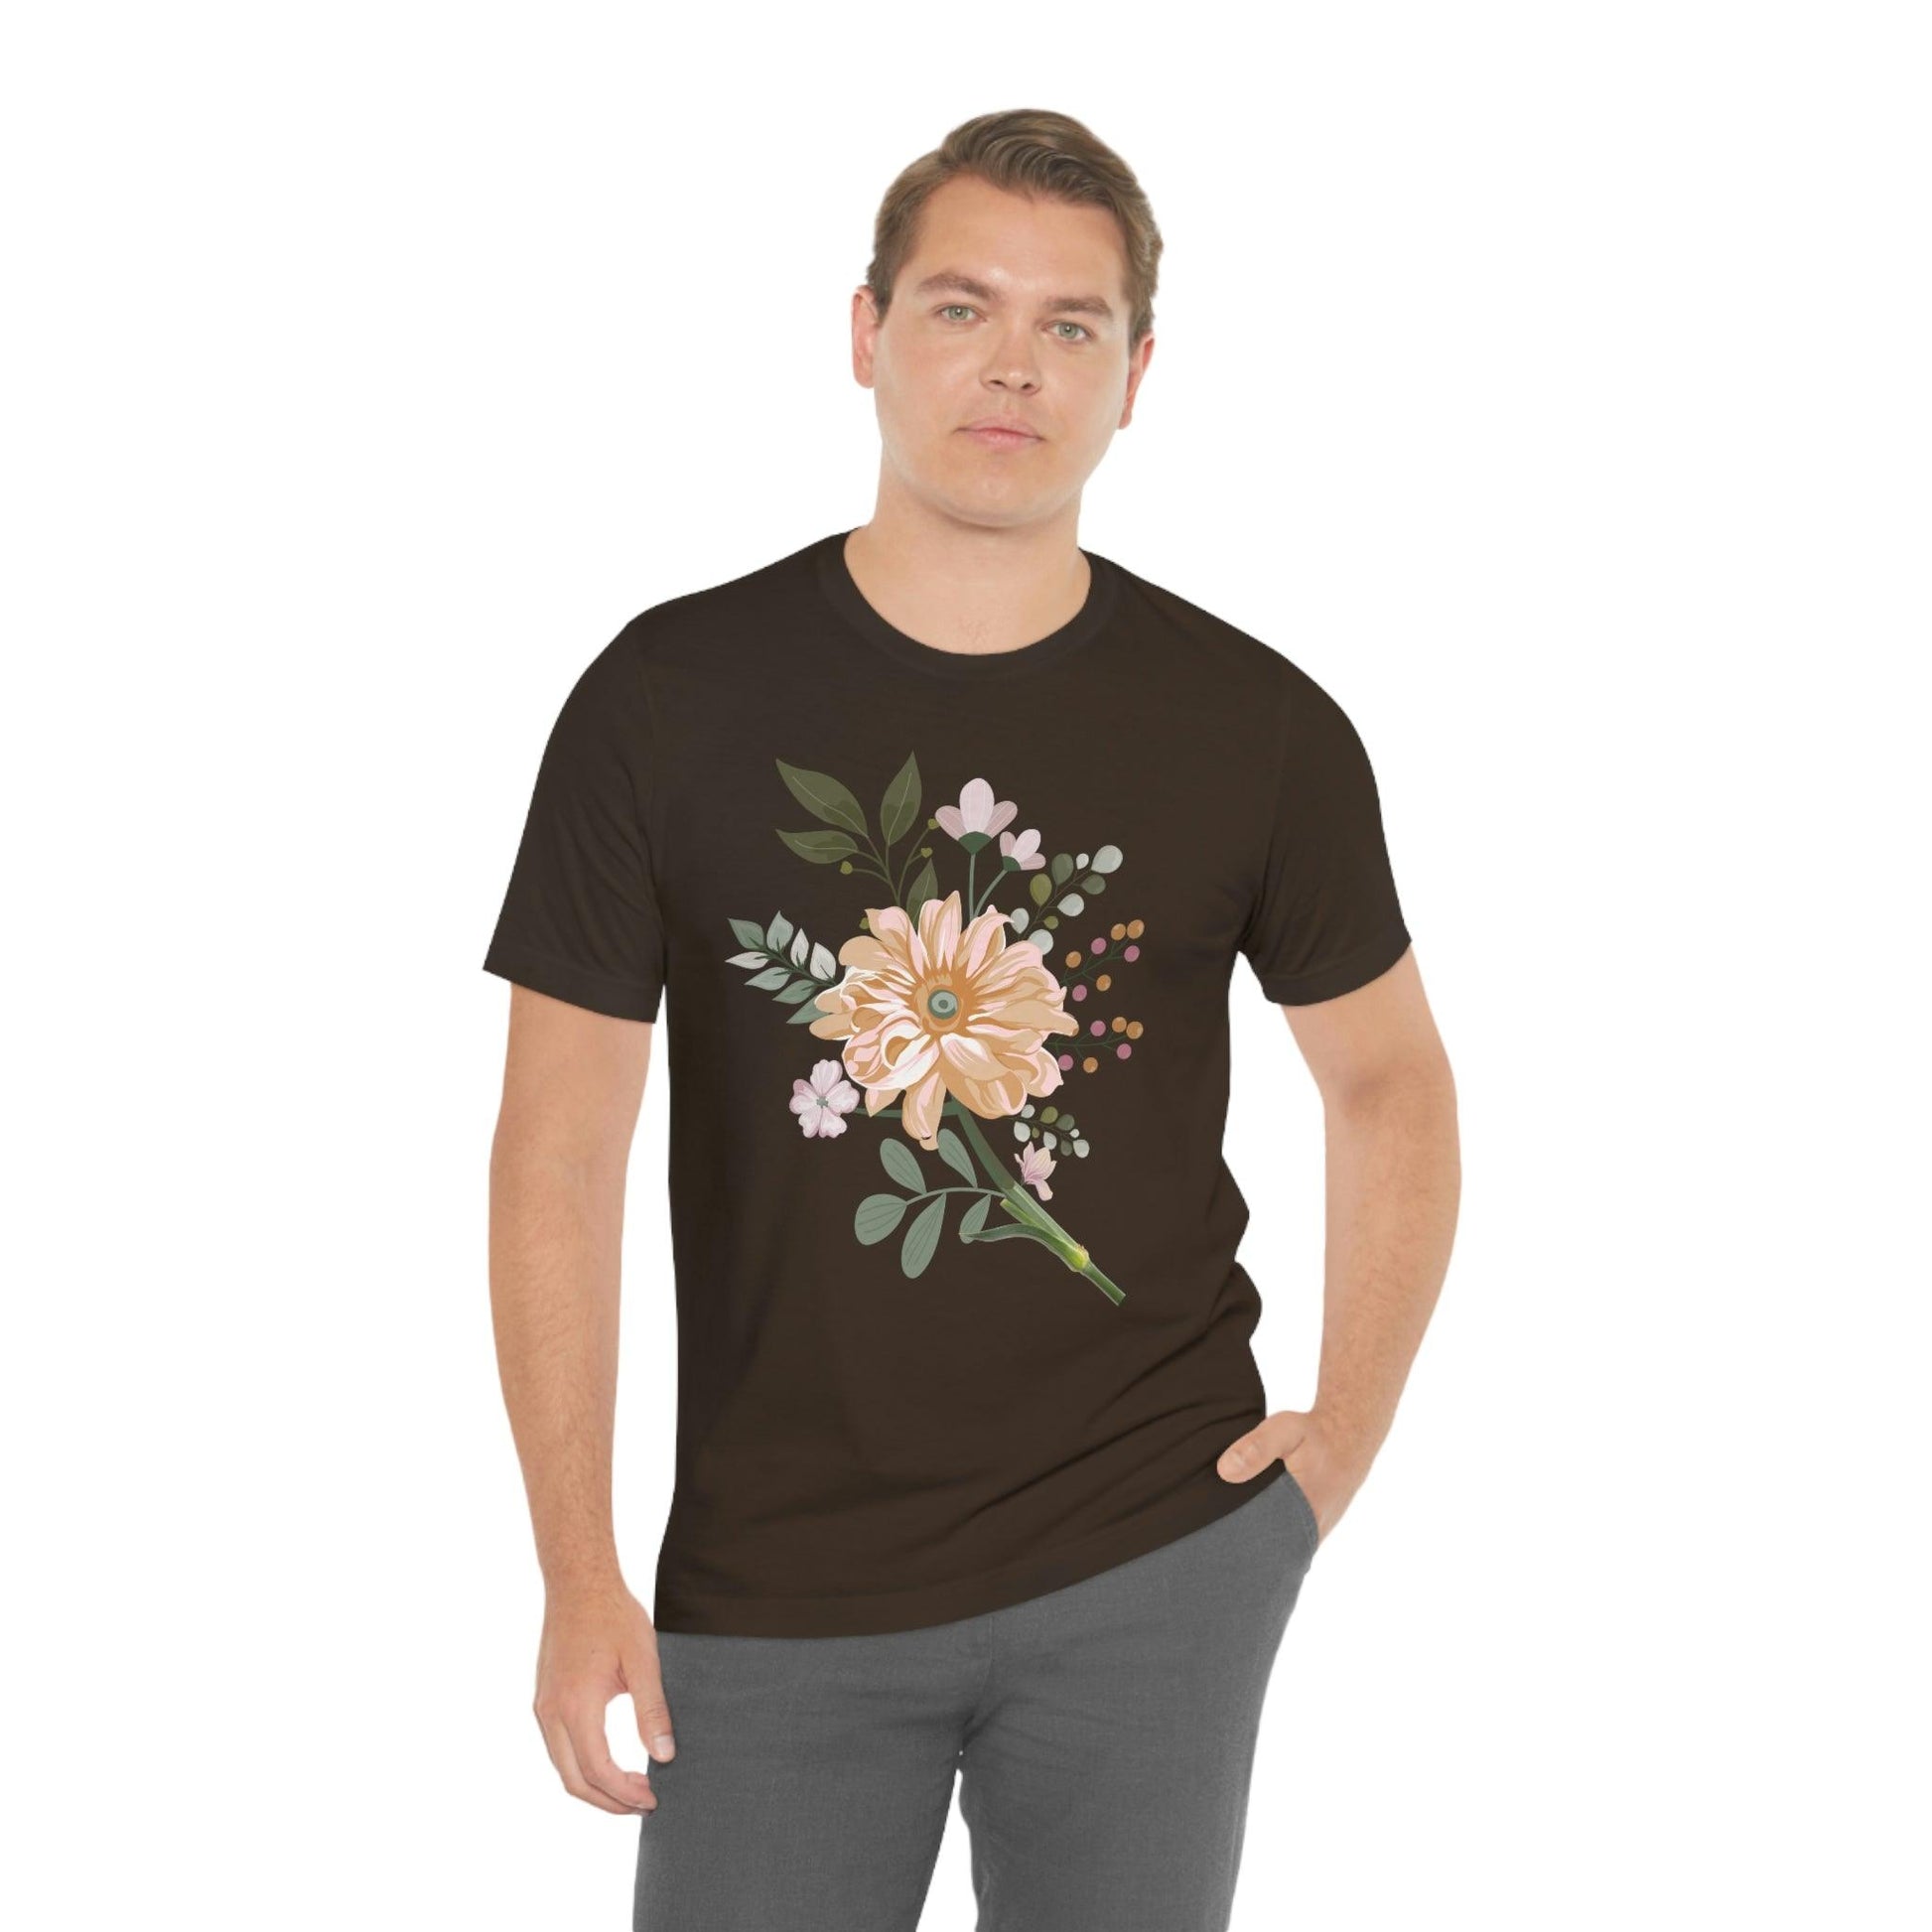 Cute Flower T-shirt - Nature lover Shirt - Cute Flower lover shirt - Giftsmojo